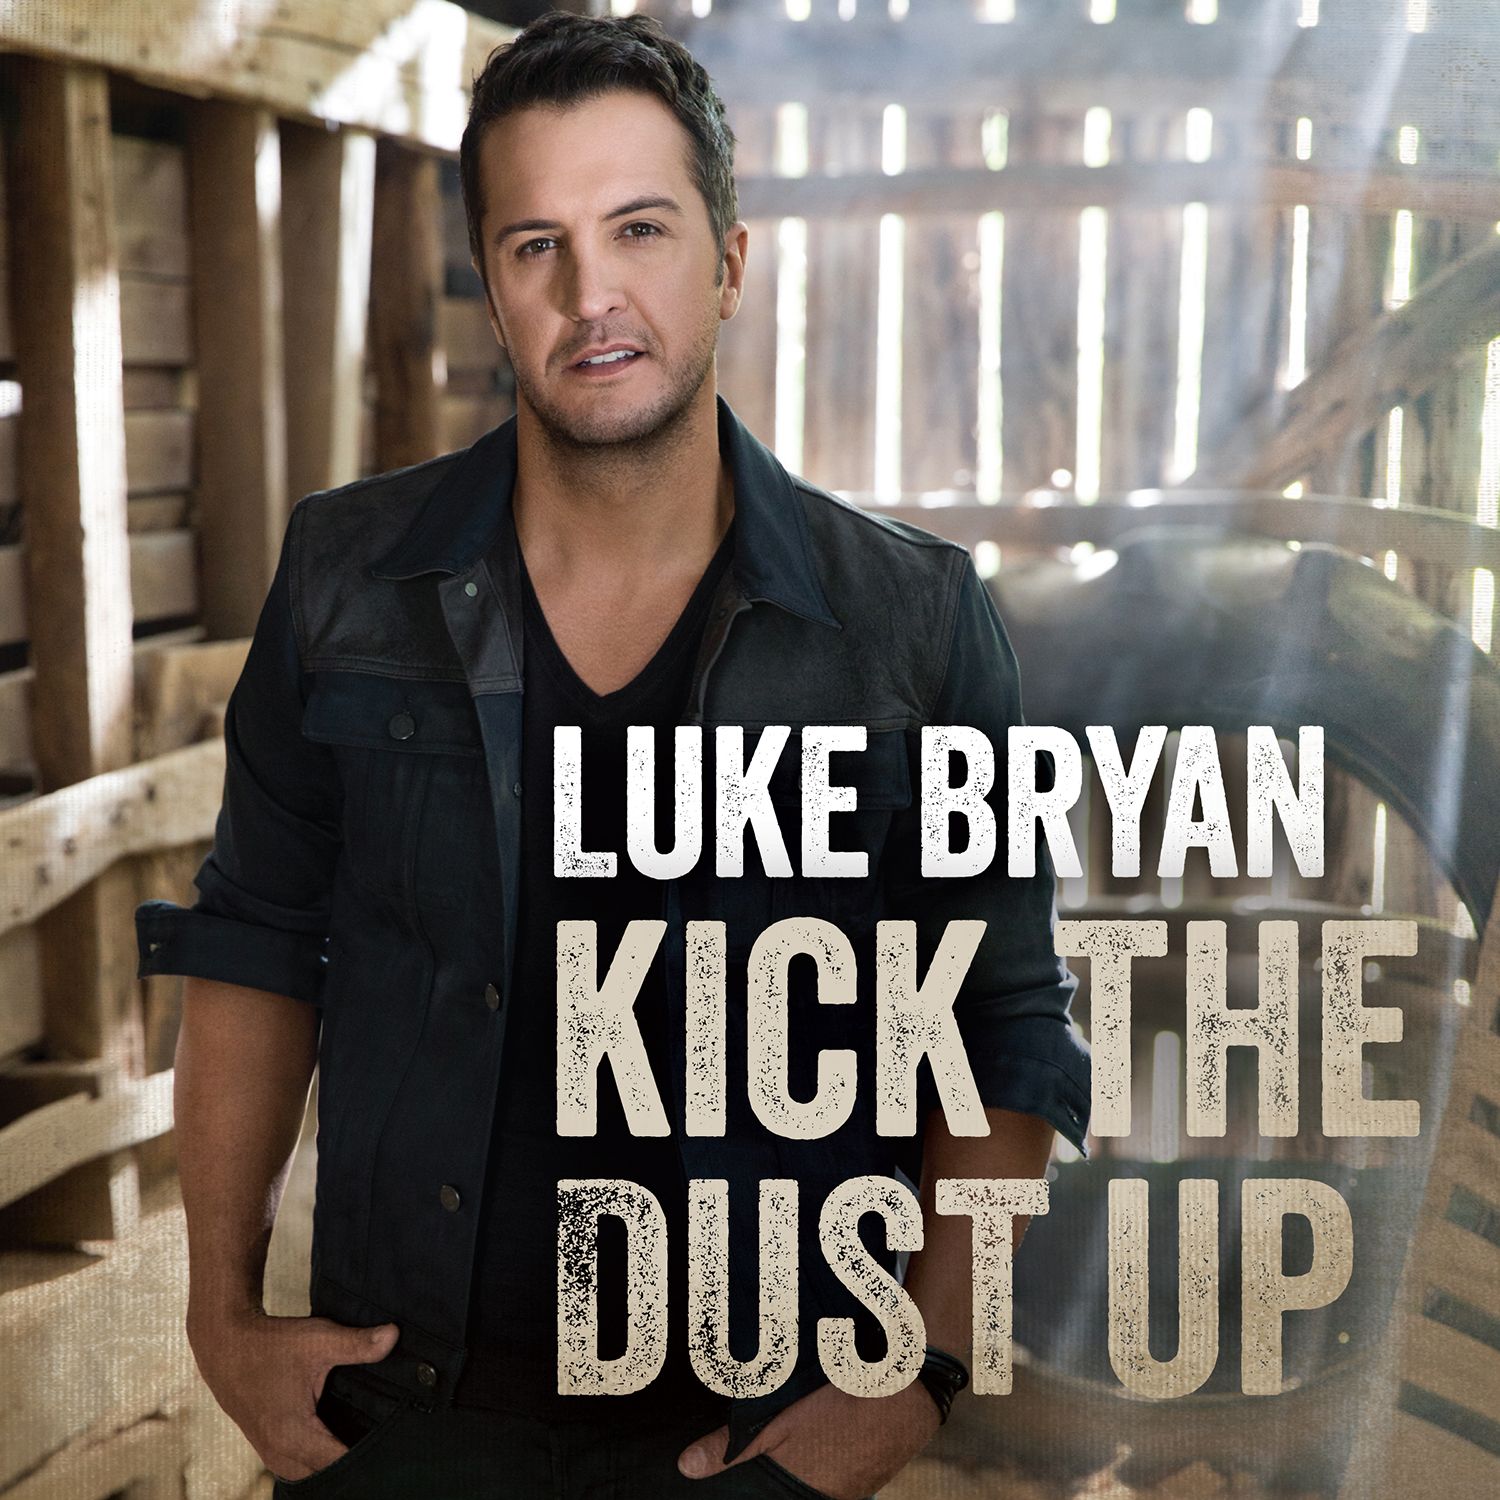 Luke Bryan Releases New Single “Kick The Dust Up”